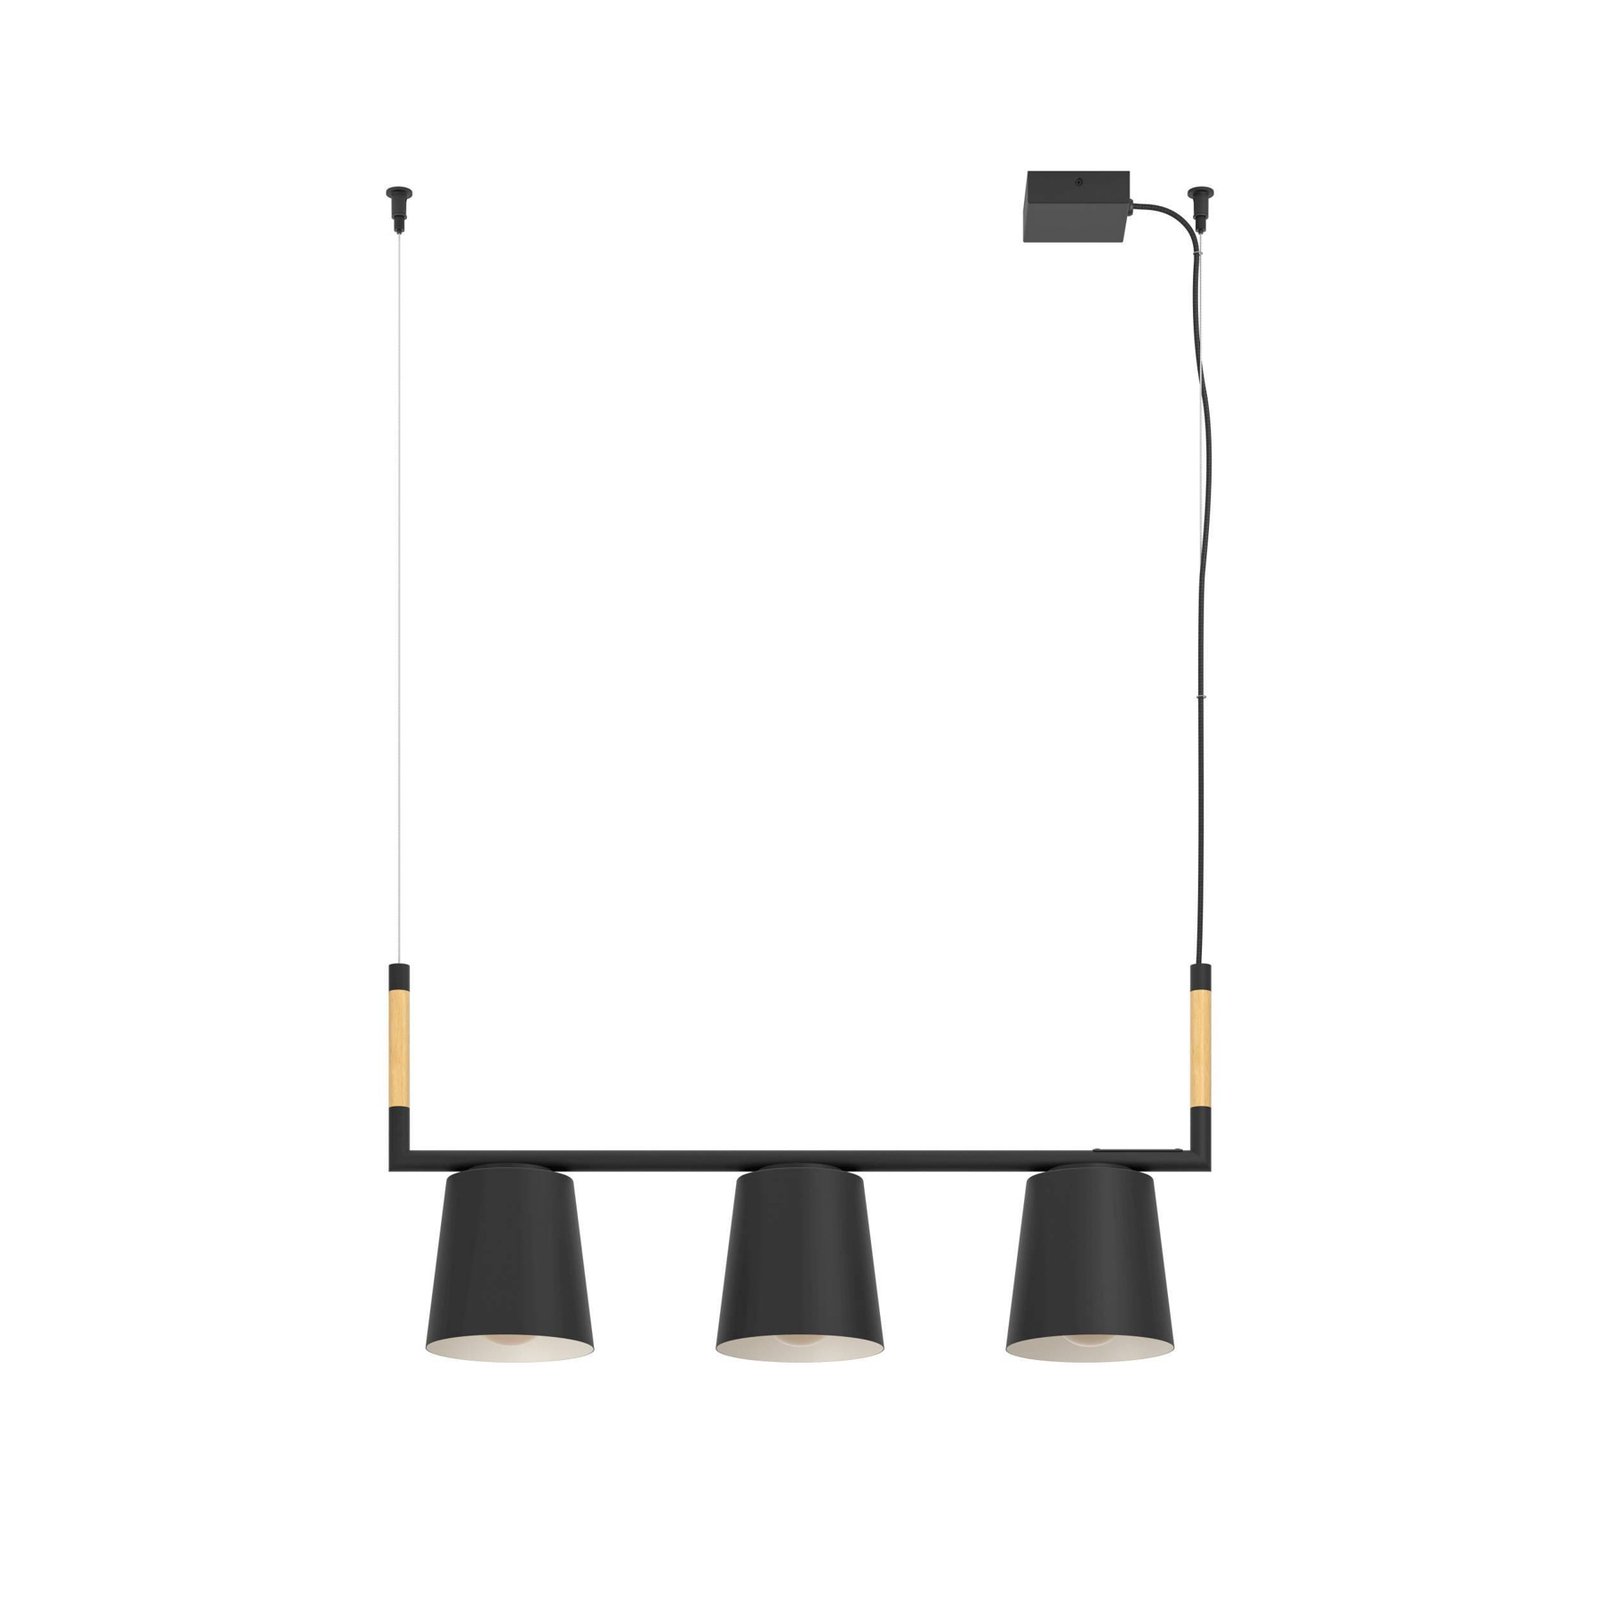 Lacey rippvalgusti, pikkus 78 cm, must, 3-valgusti, teras